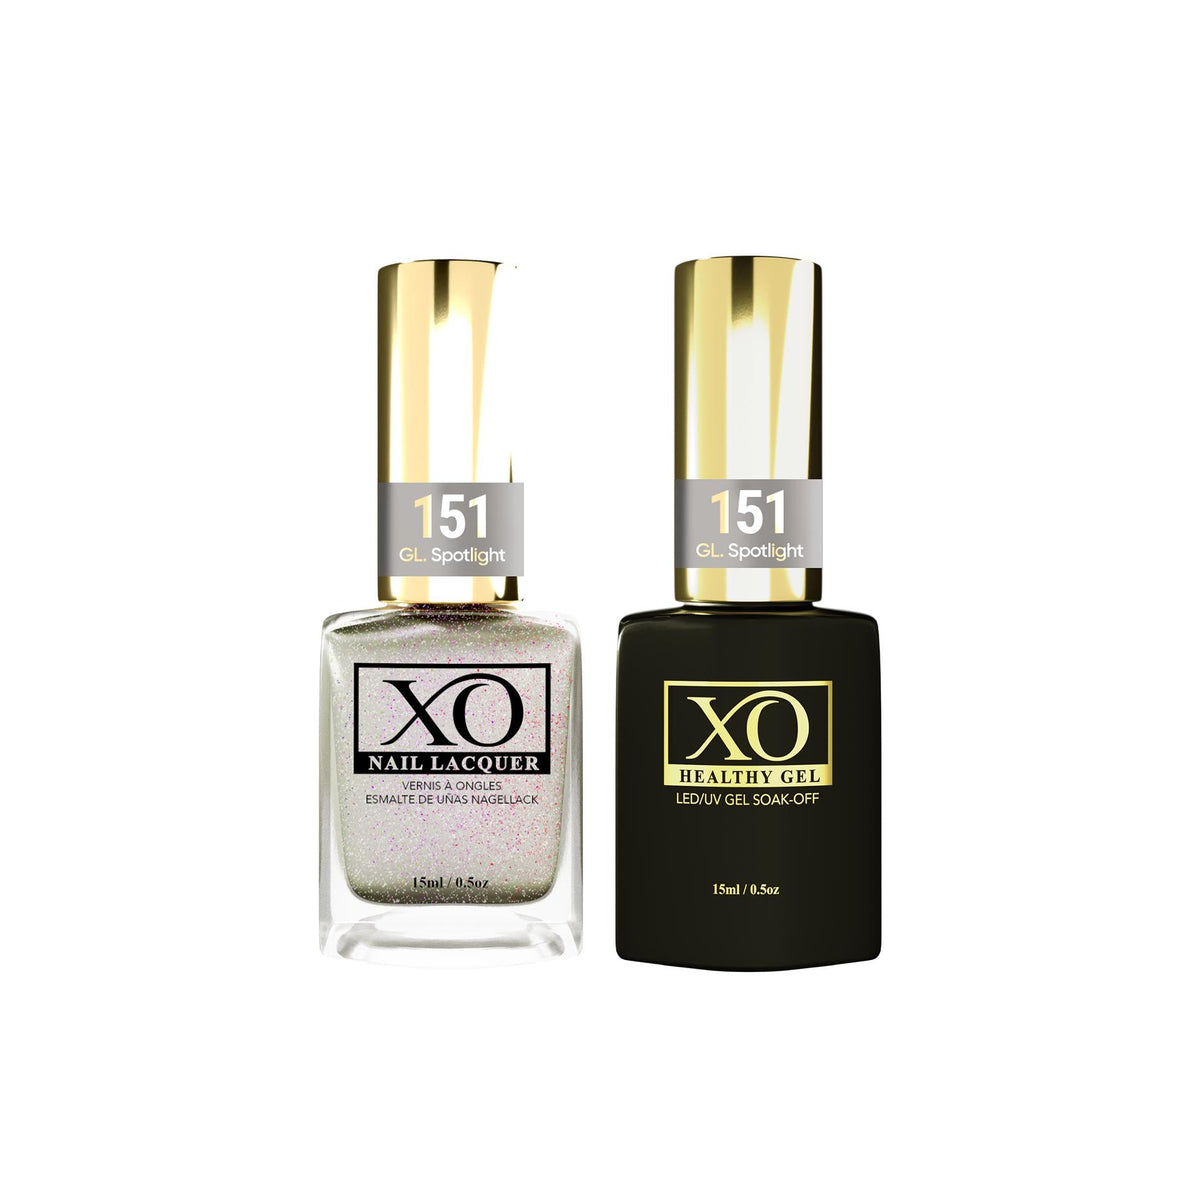 XO Gel Duo (Gel & Lacquer) - GL. Spotlight - 151-XO- Nail Supply American Gel Polish - Phuong Ni